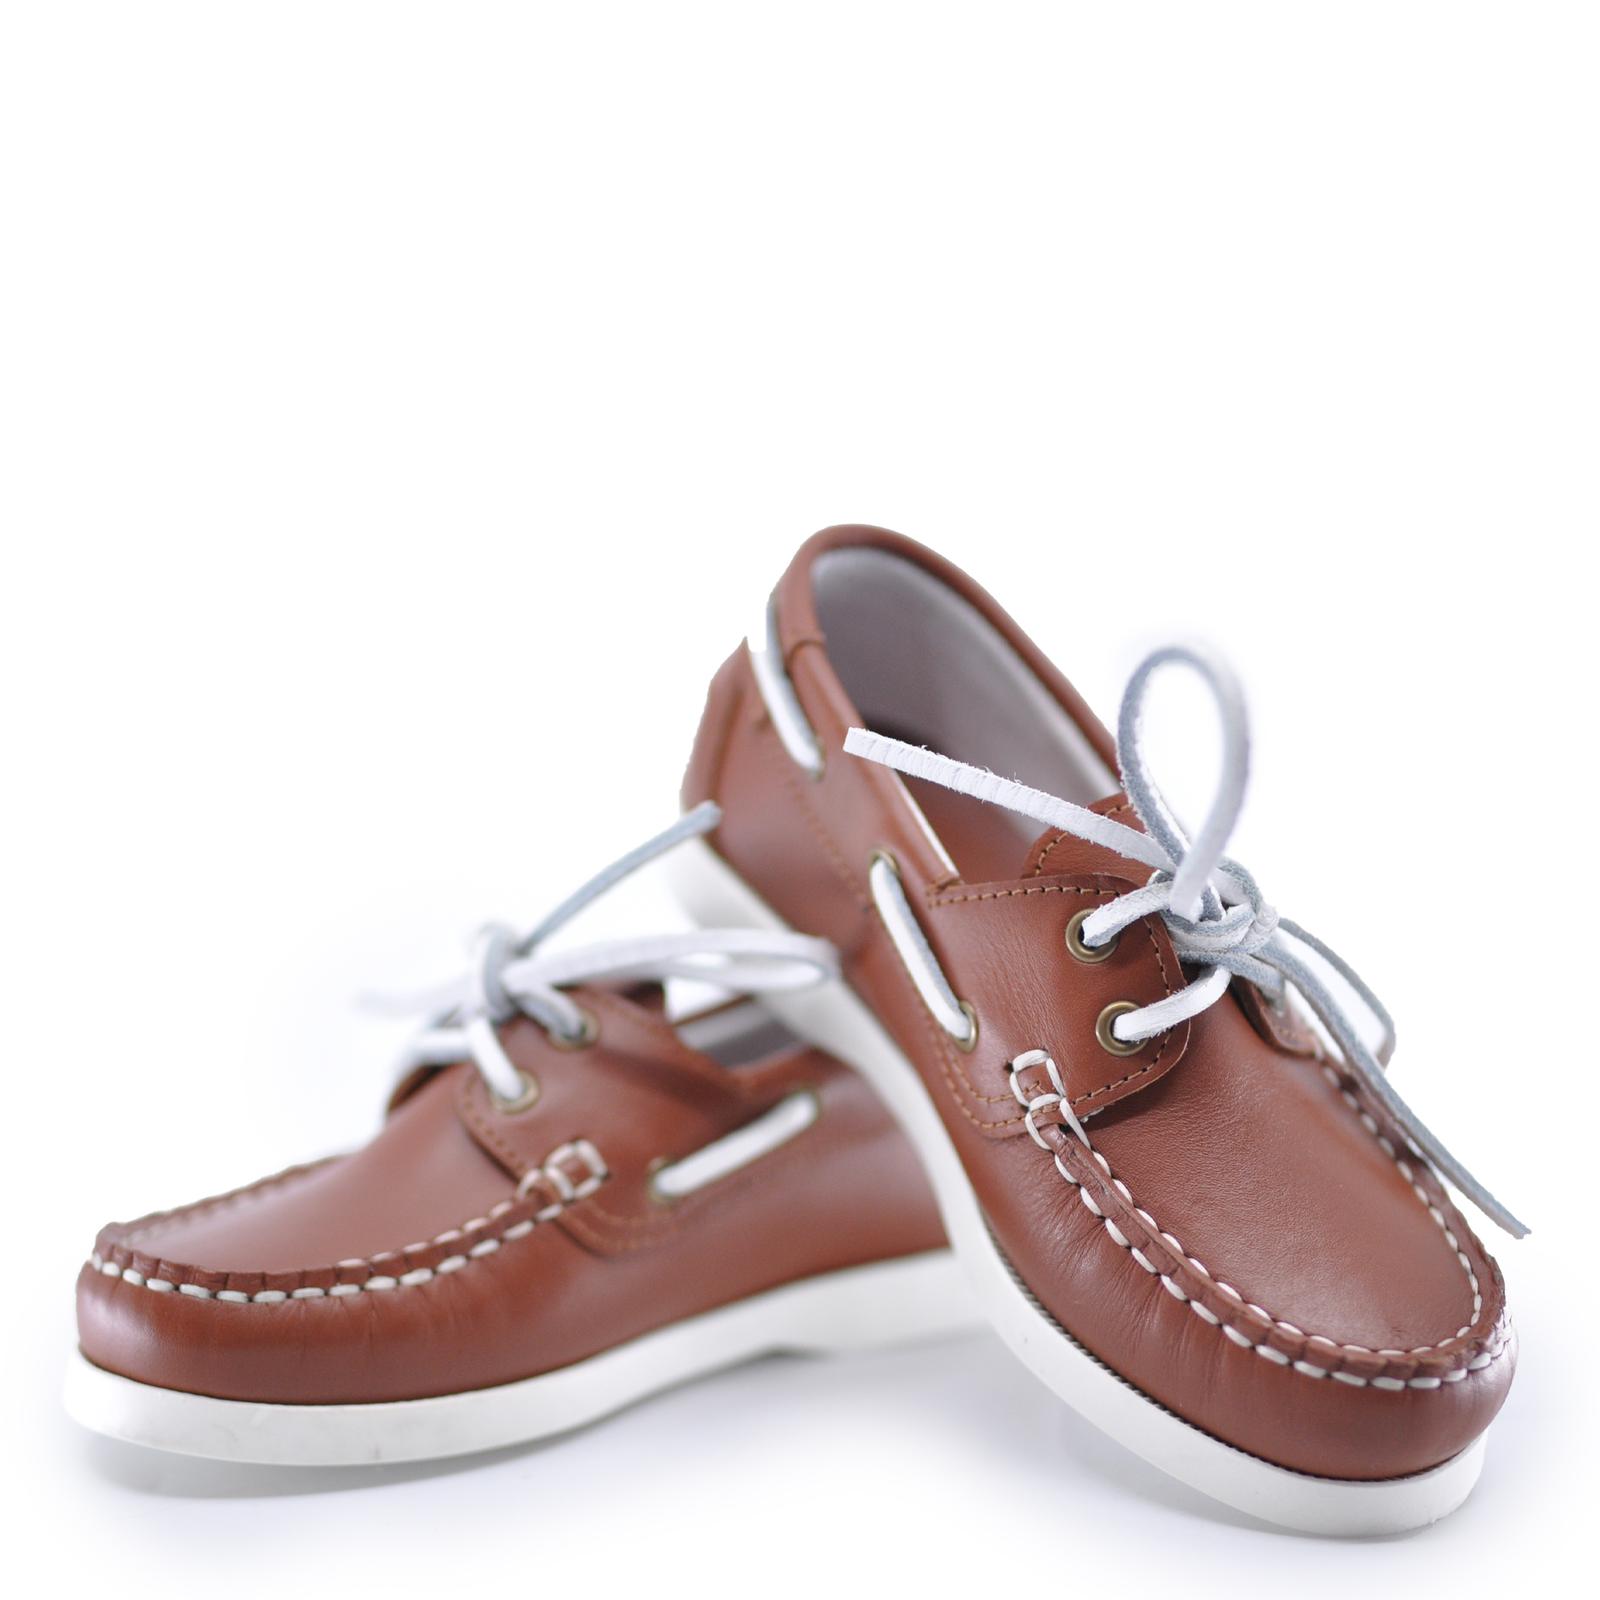 Atlanta Mocassin Brown Boat Shoe-Tassel Children Shoes